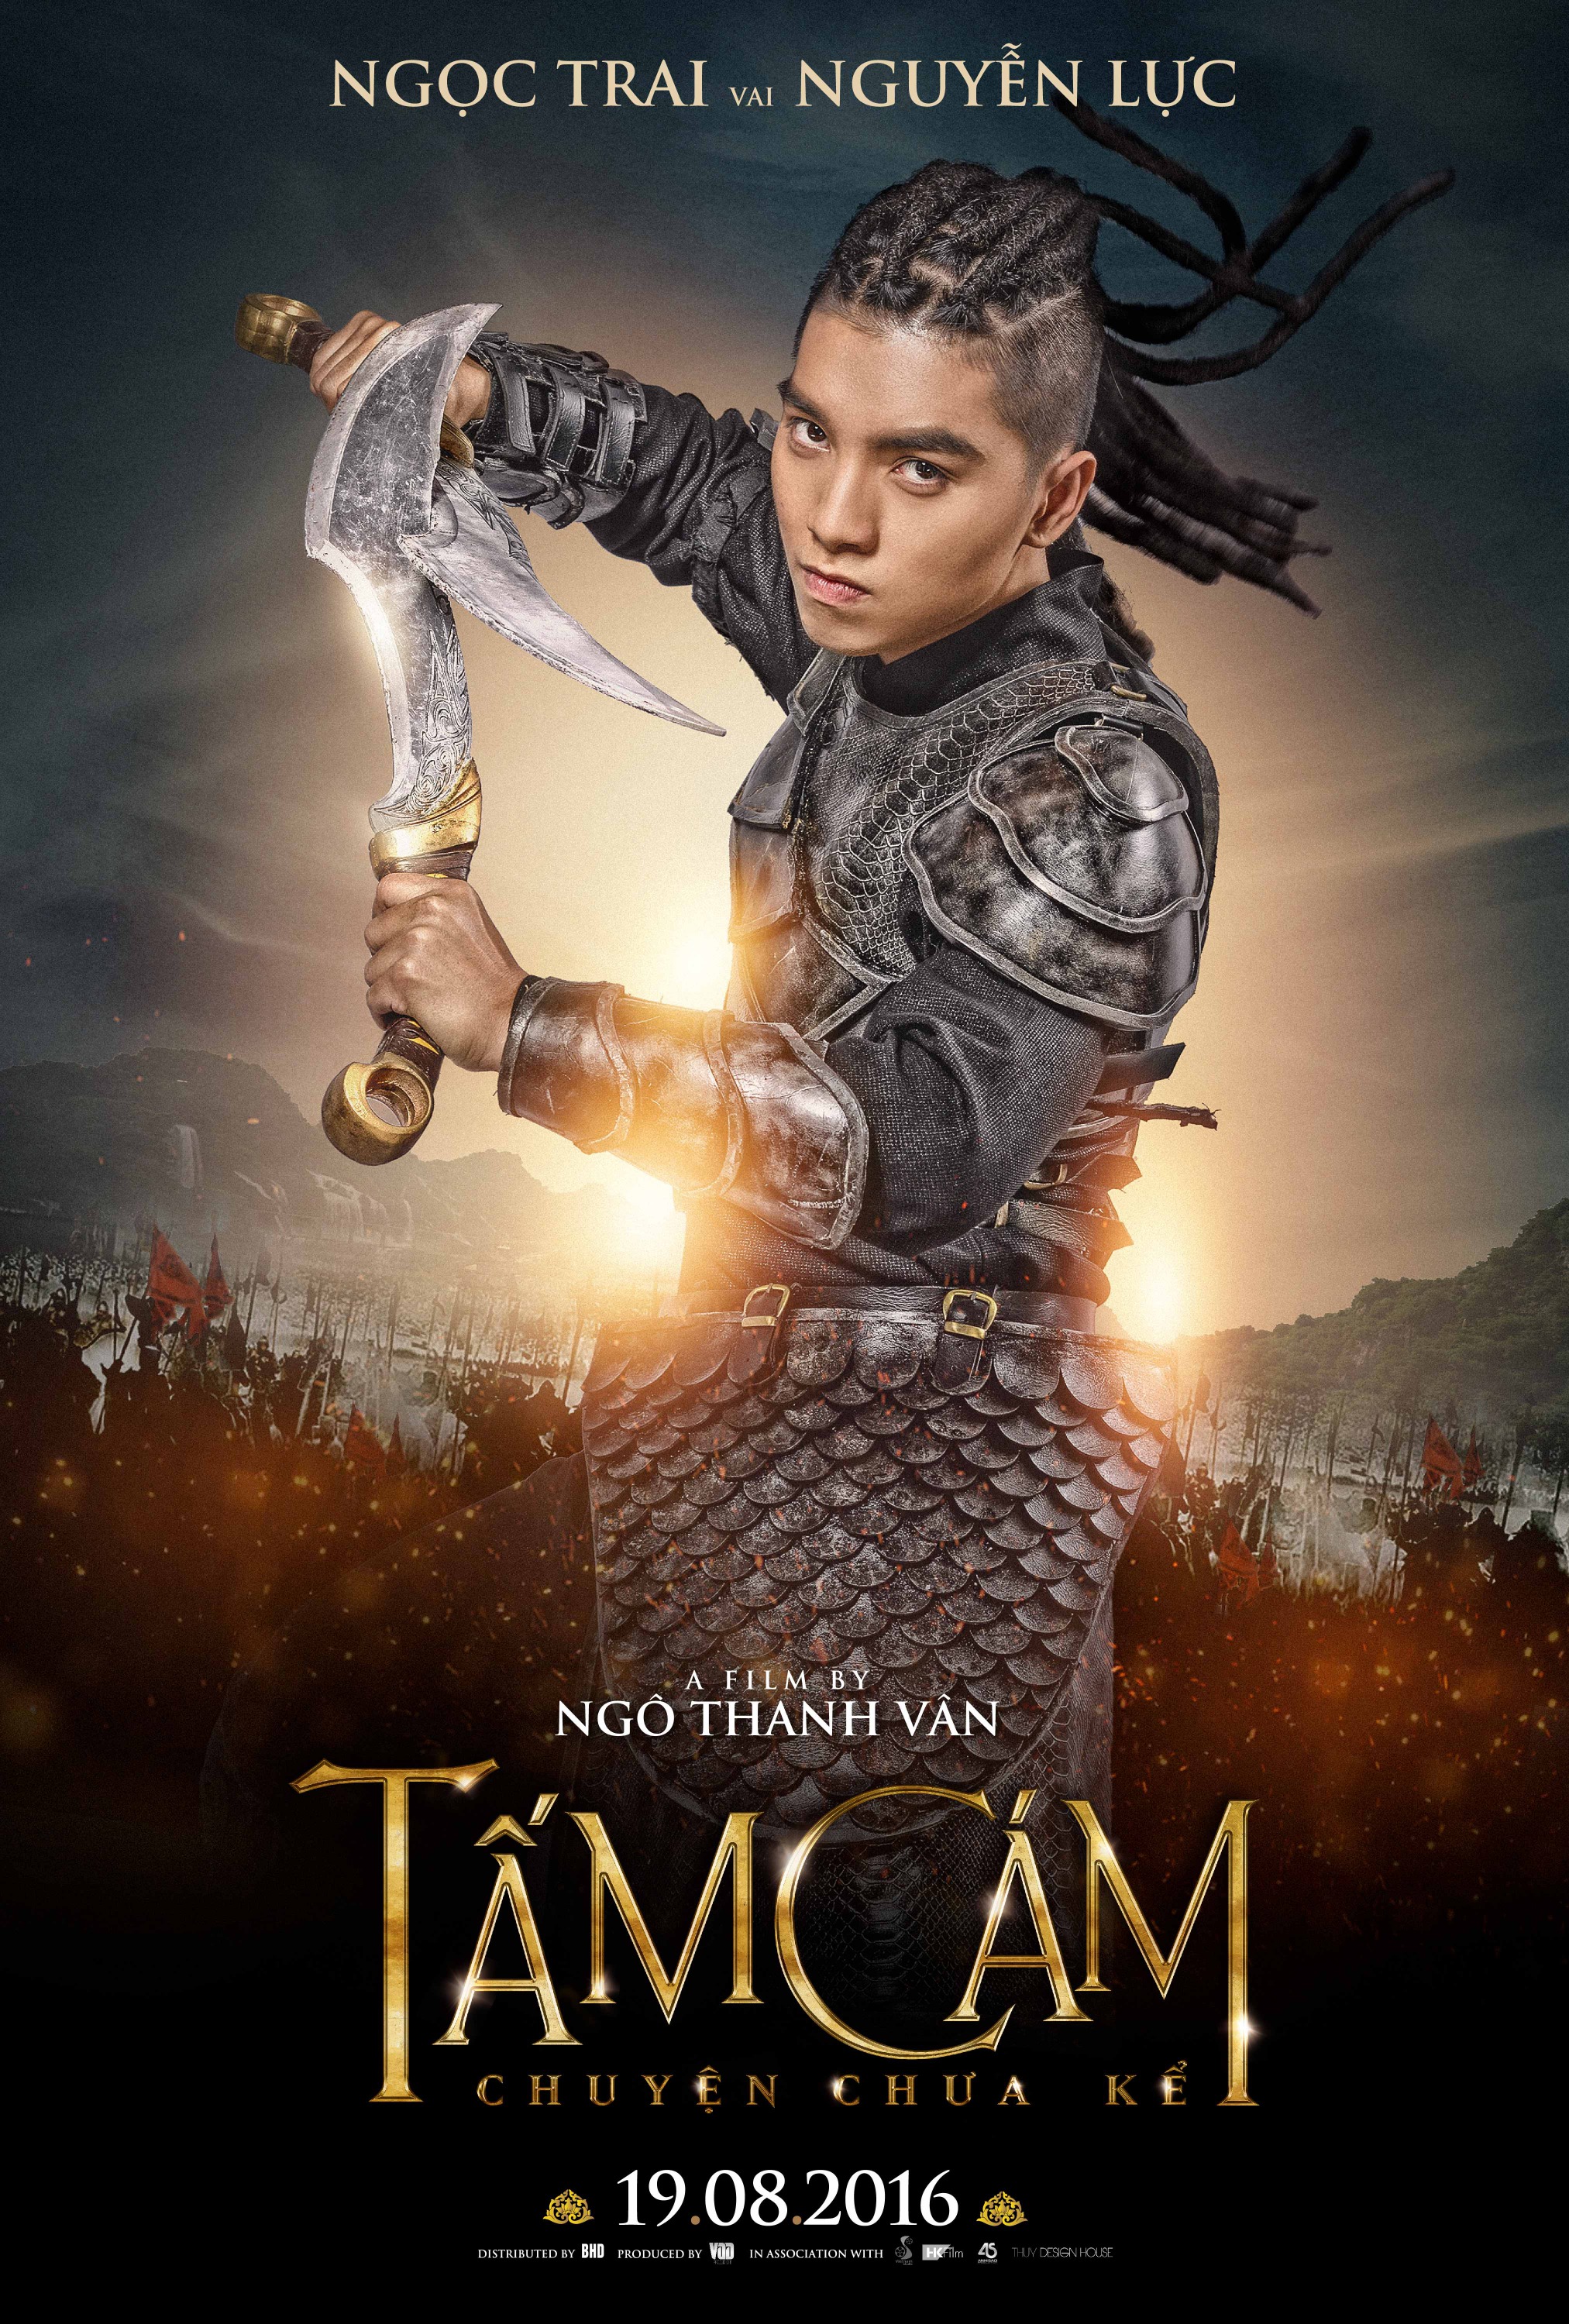 Mega Sized Movie Poster Image for Tam Cam: Chuyen Chua Ke (#13 of 15)